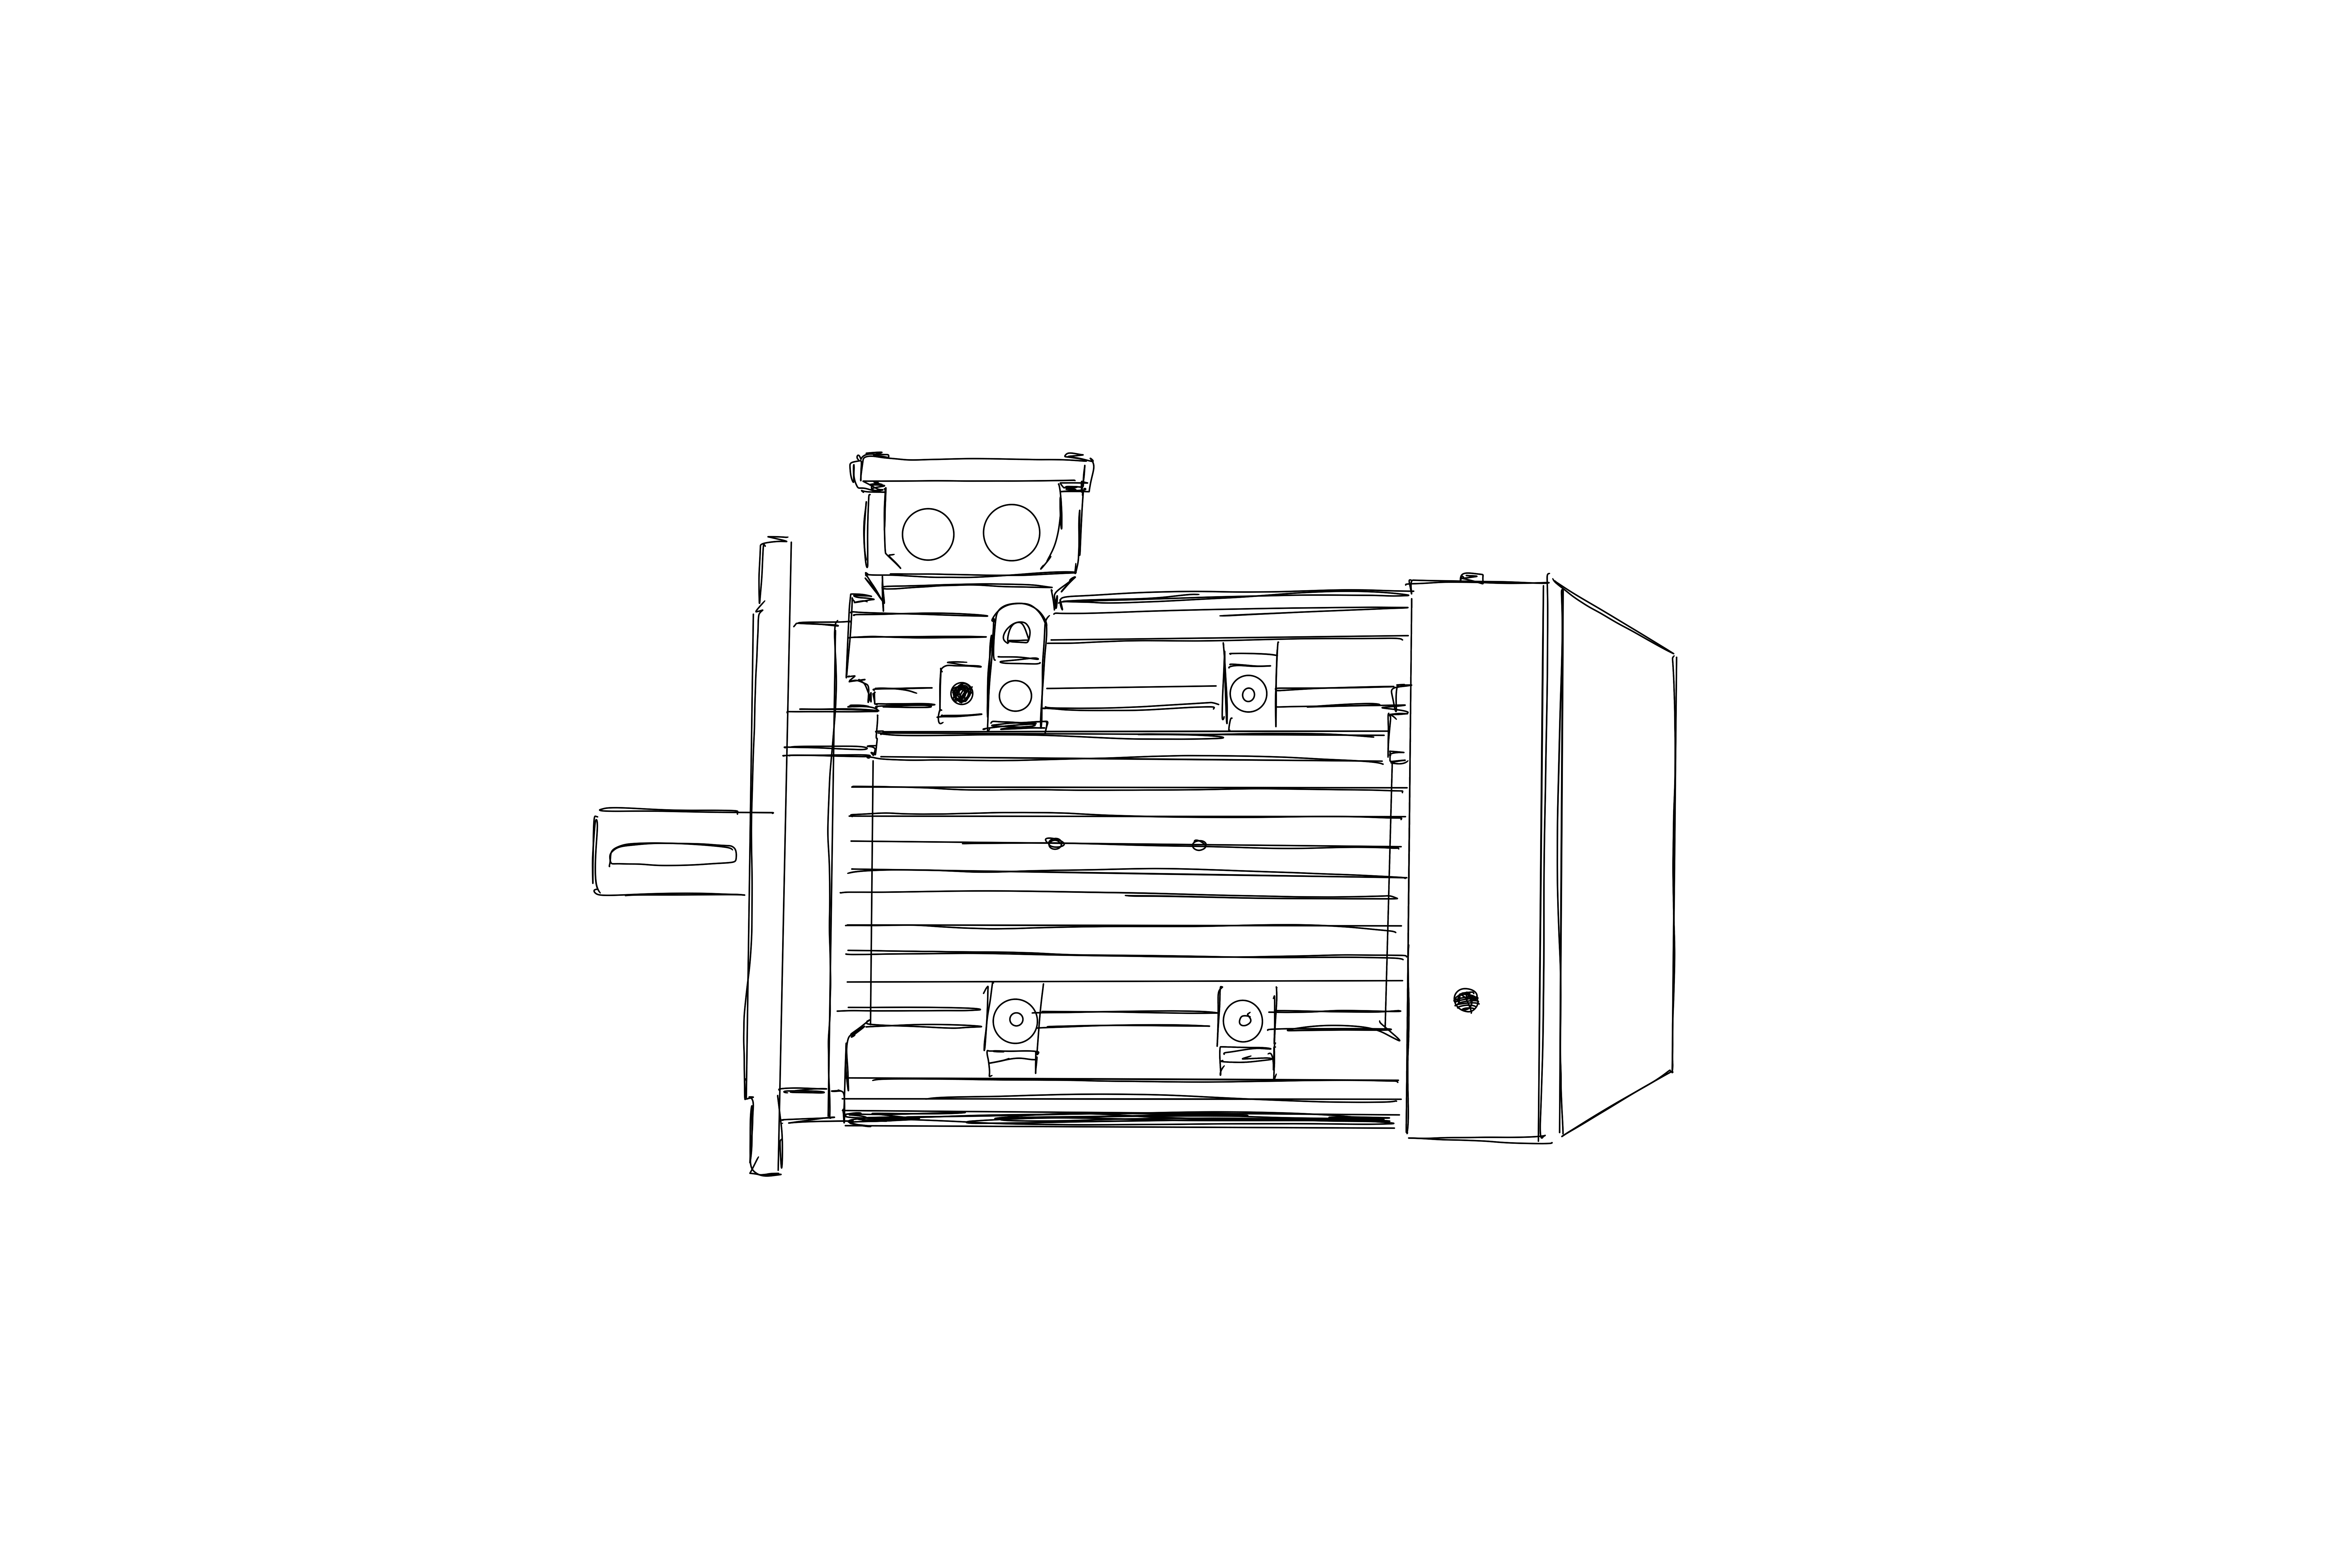 Single-phase motor FBS 63 B 4